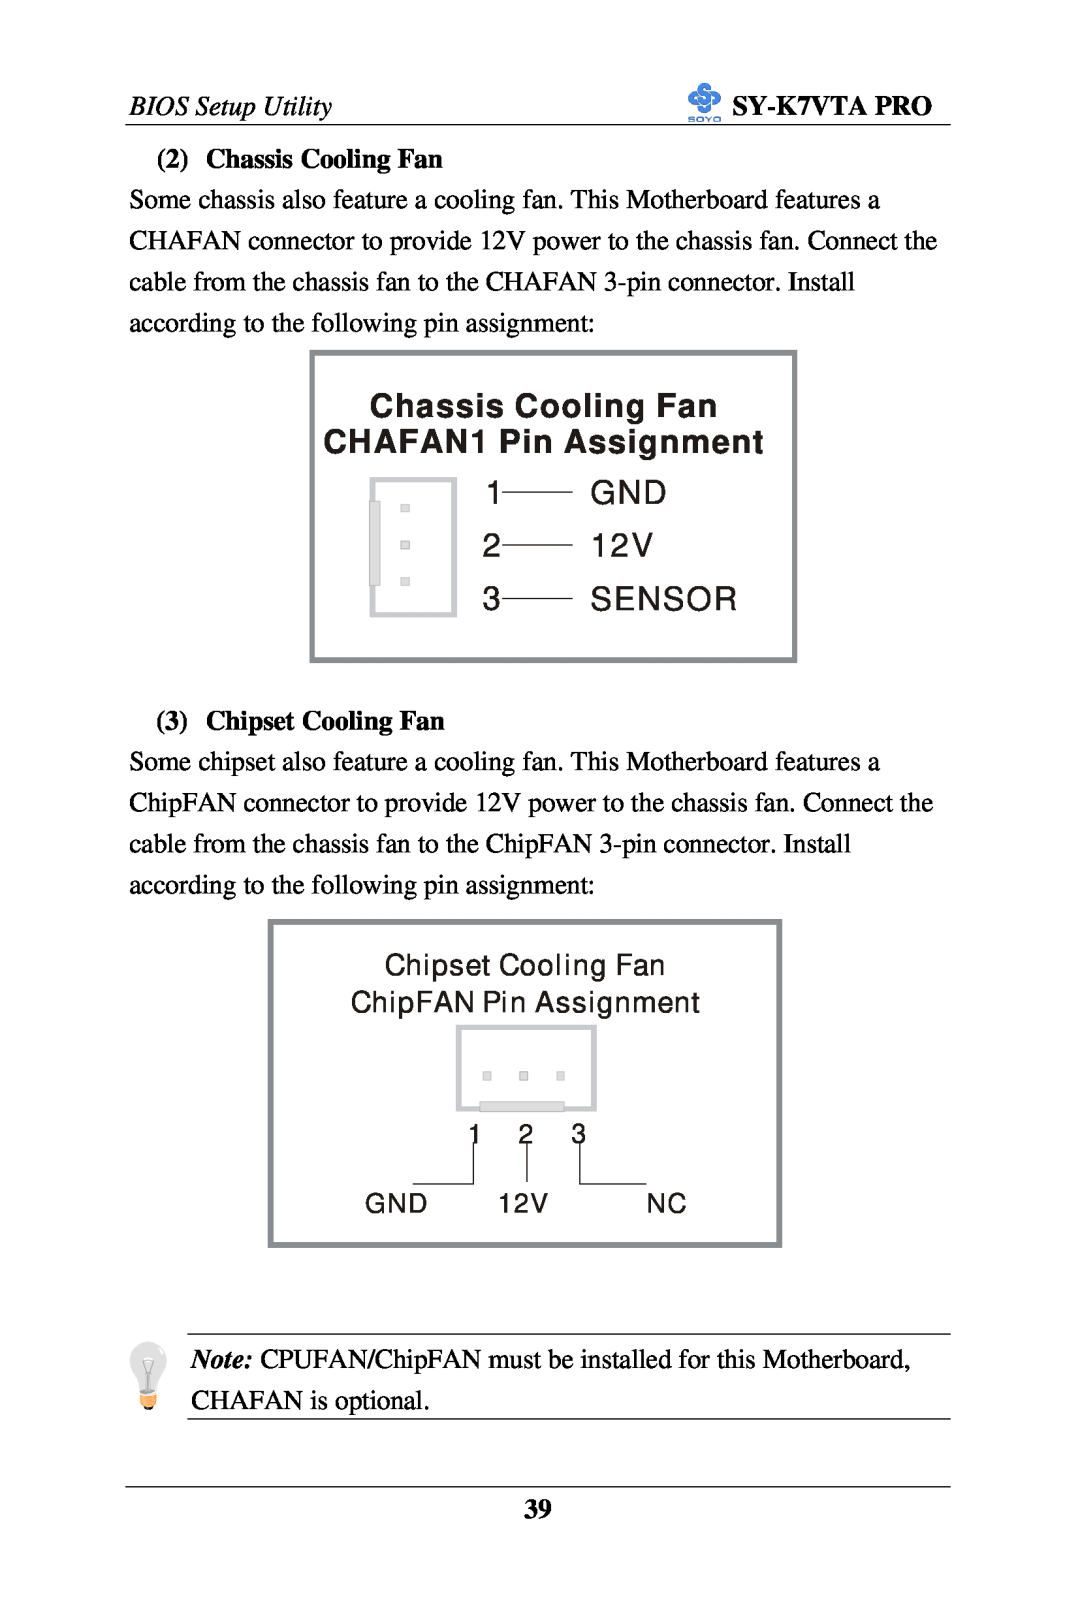 SOYO SY-K7VTA PRO Chassis Cooling Fan CHAFAN1 Pin Assignment, Chipset Cooling Fan ChipFAN Pin Assignment, 1 GND, Sensor 